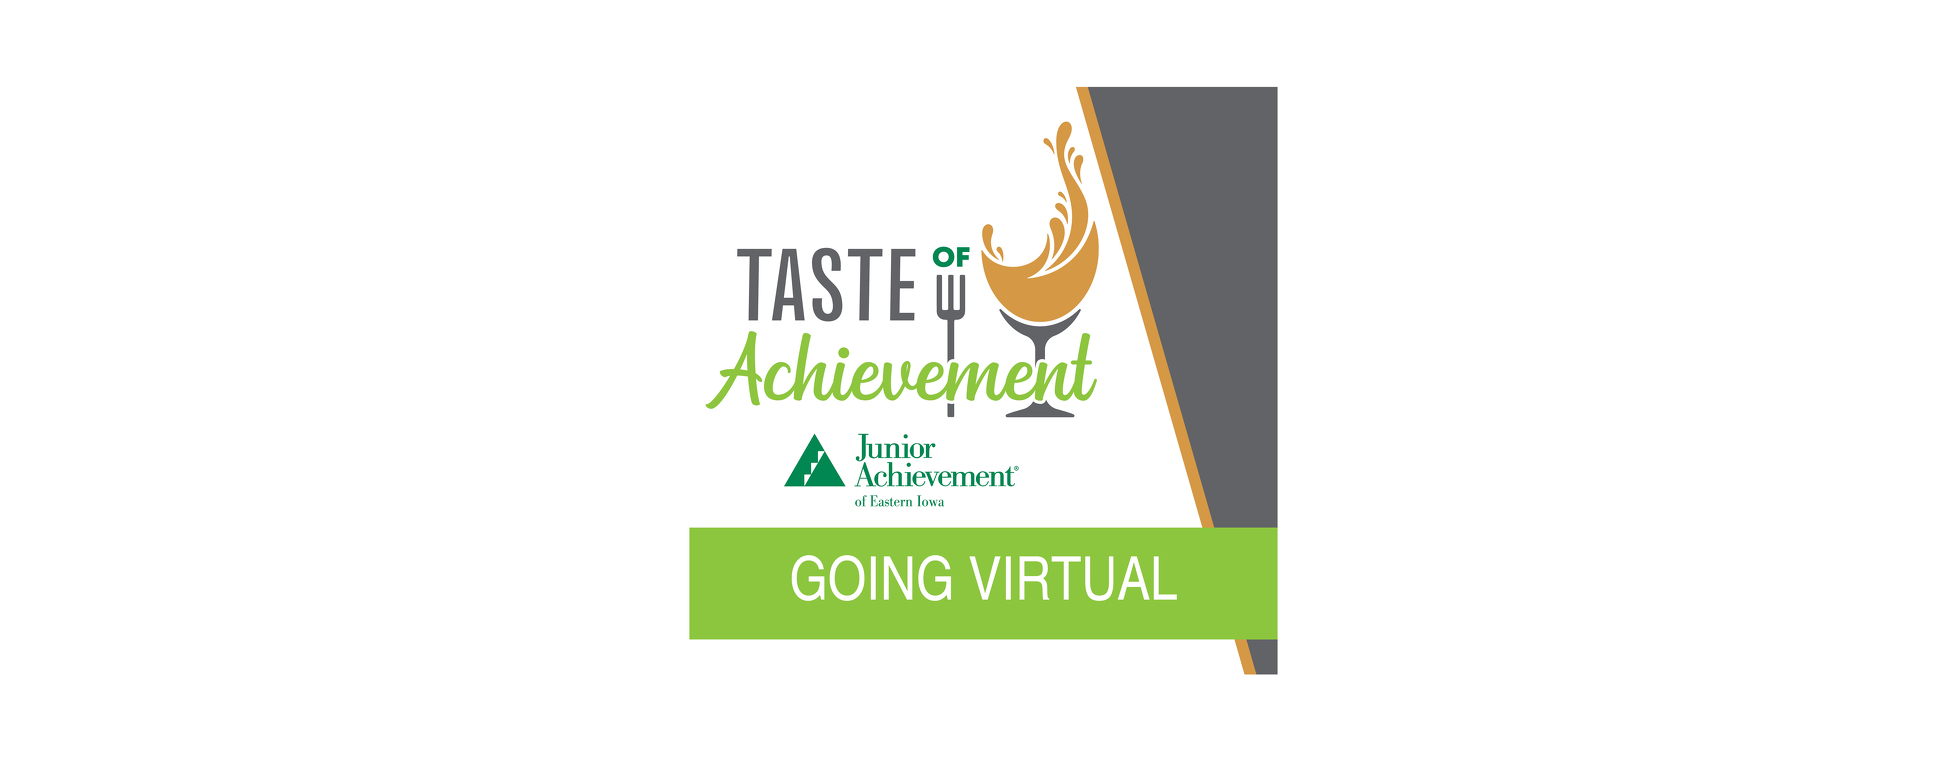 Eastern Iowa Virtual Taste of Achievement 2020